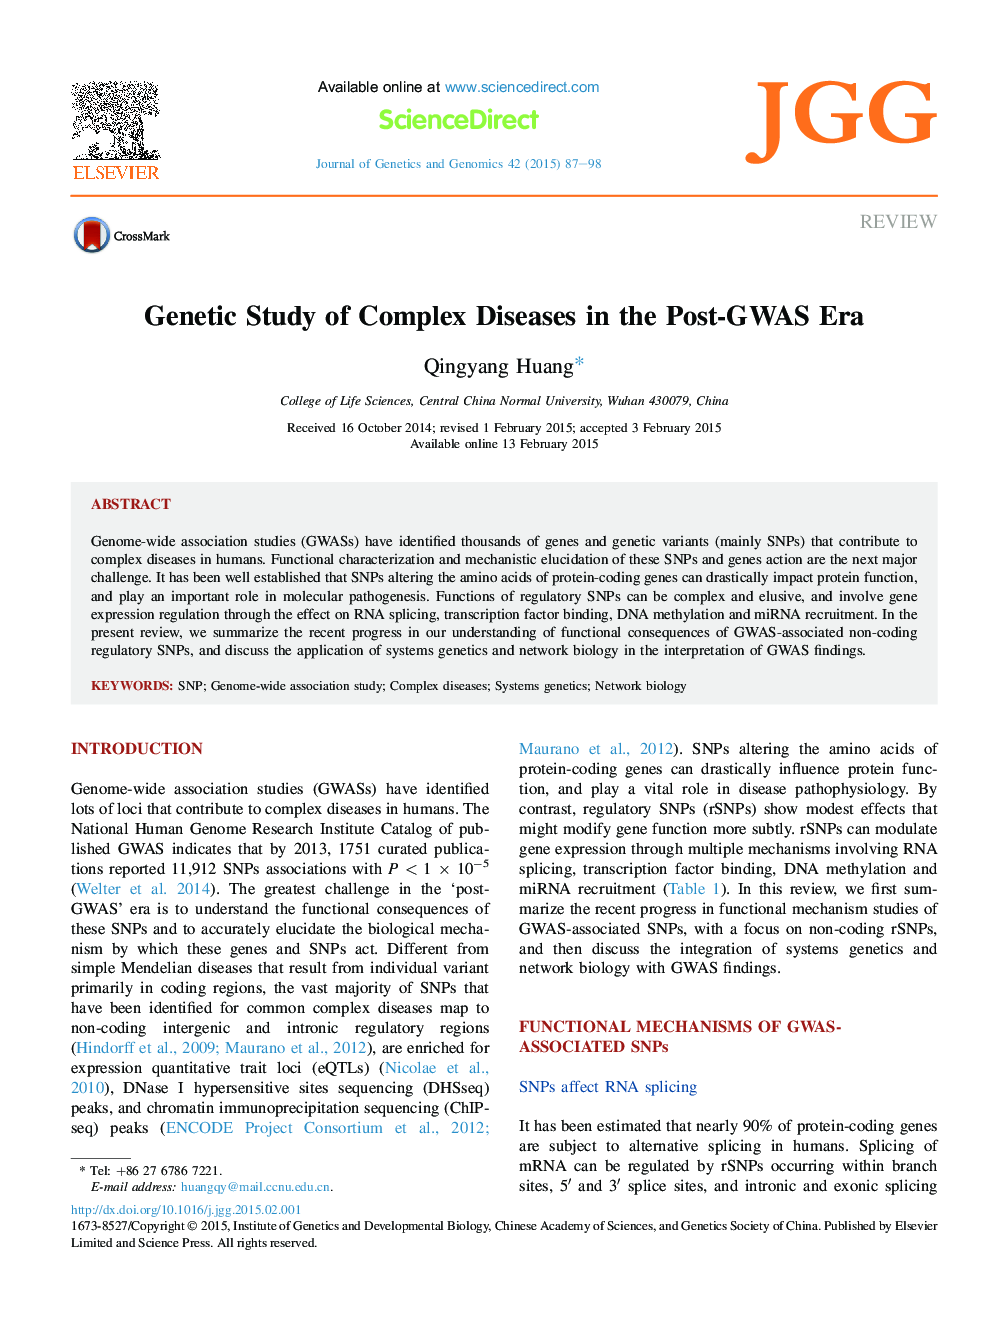 Genetic Study of Complex Diseases in the Post-GWAS Era